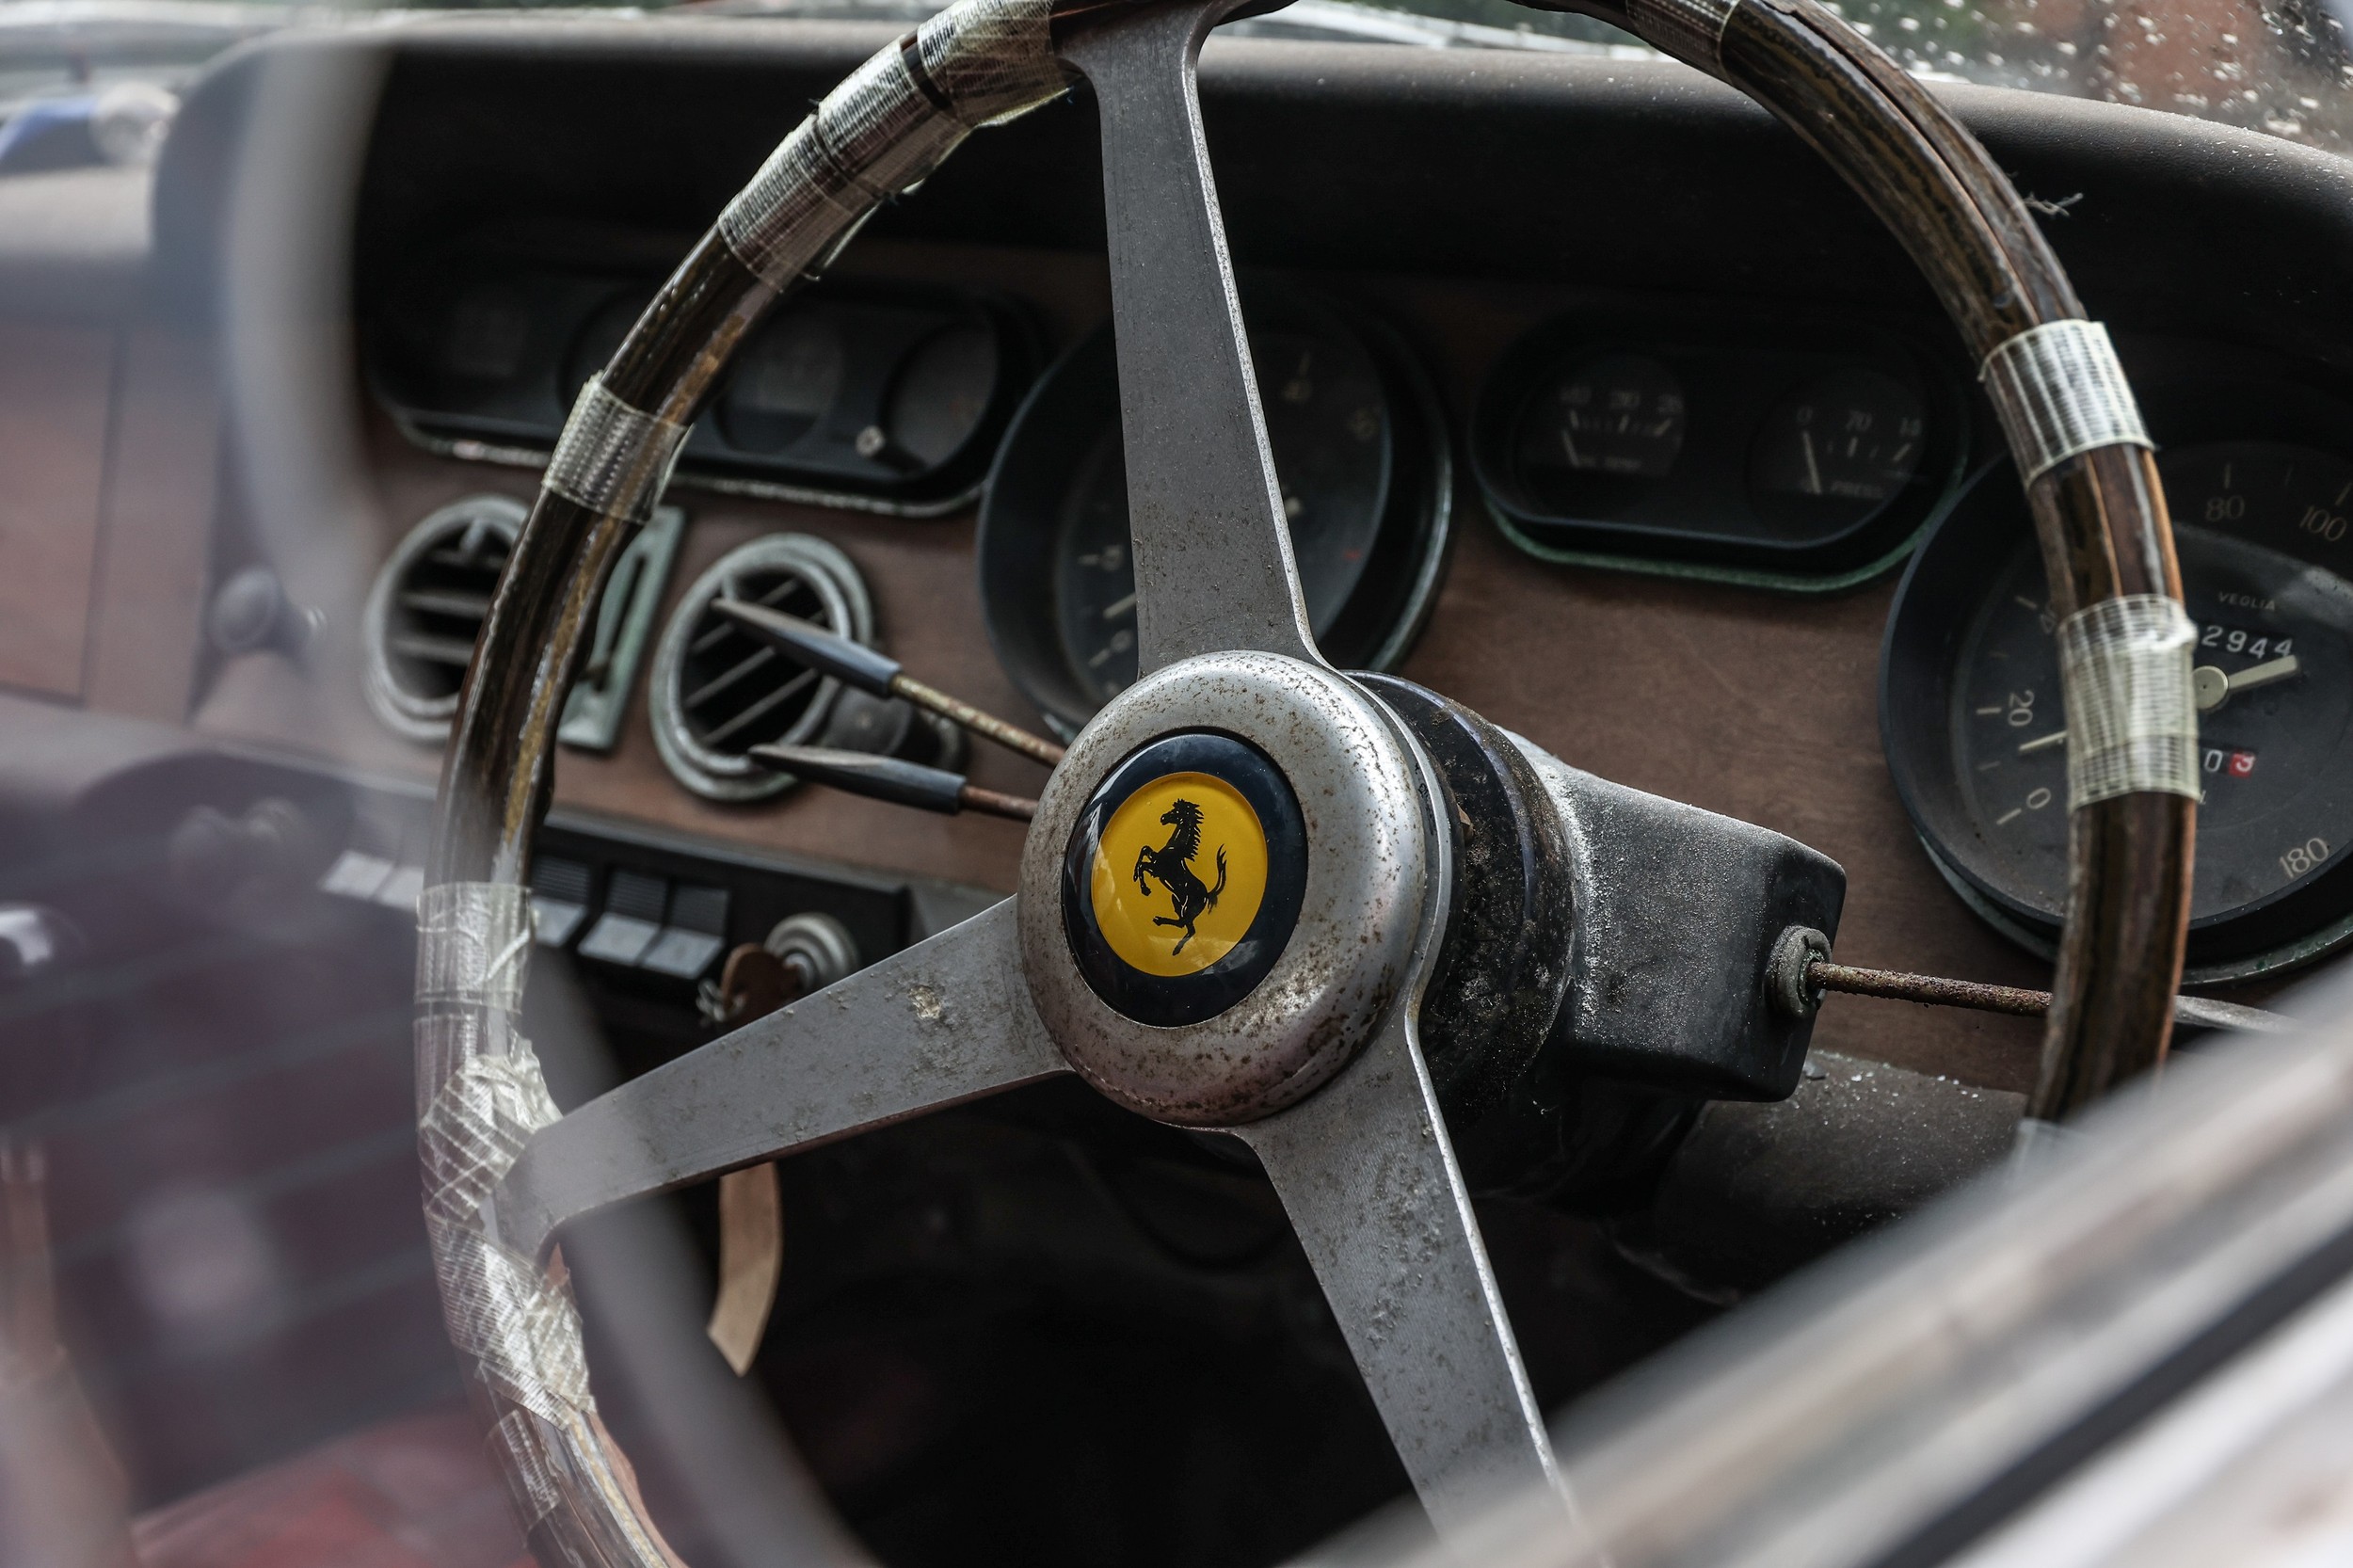 Ferrari 330 GT 2+2 steering wheel